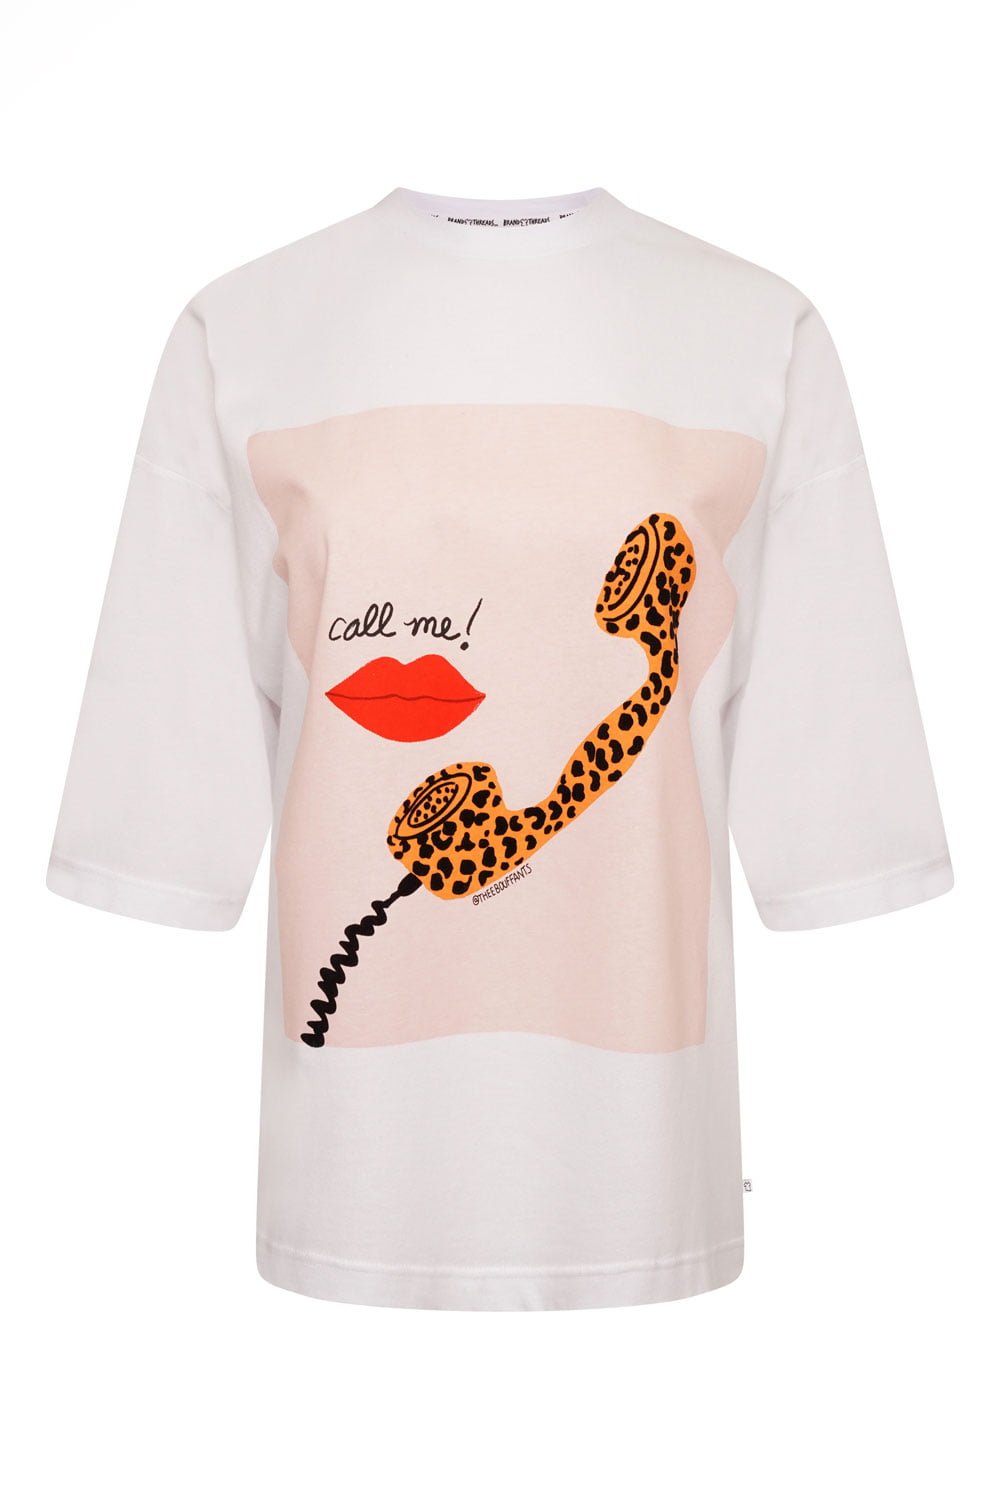 Bouffants and Broken Hearts Ladies BCI Cotton T-Shirt - Brand Threads